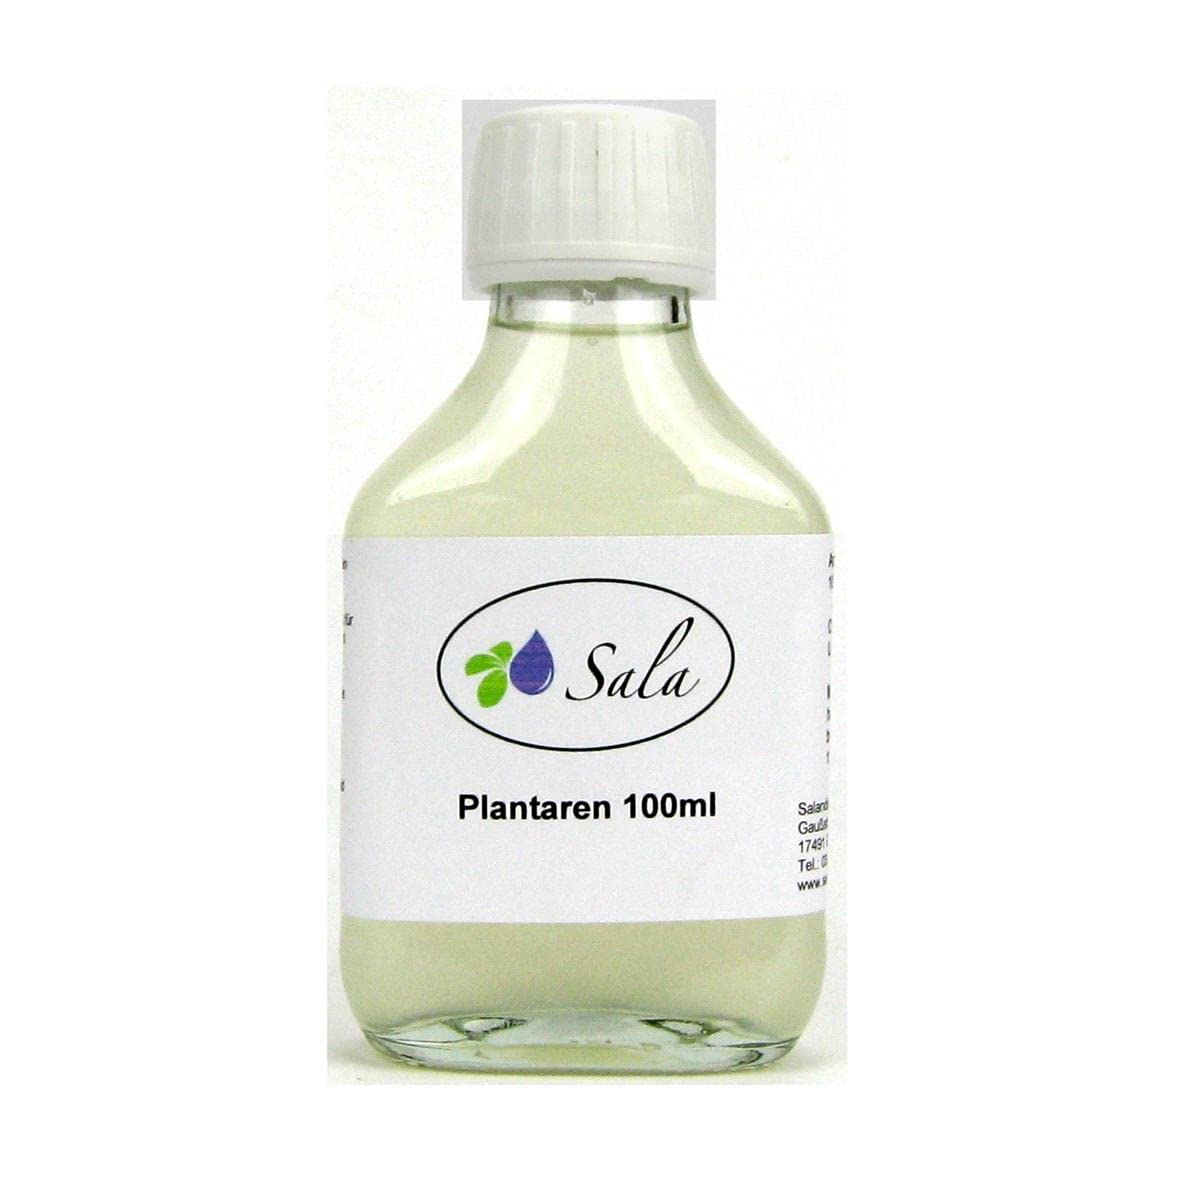 Sala Plantar Decyl Glucoside (100ml White Glass Bottle)